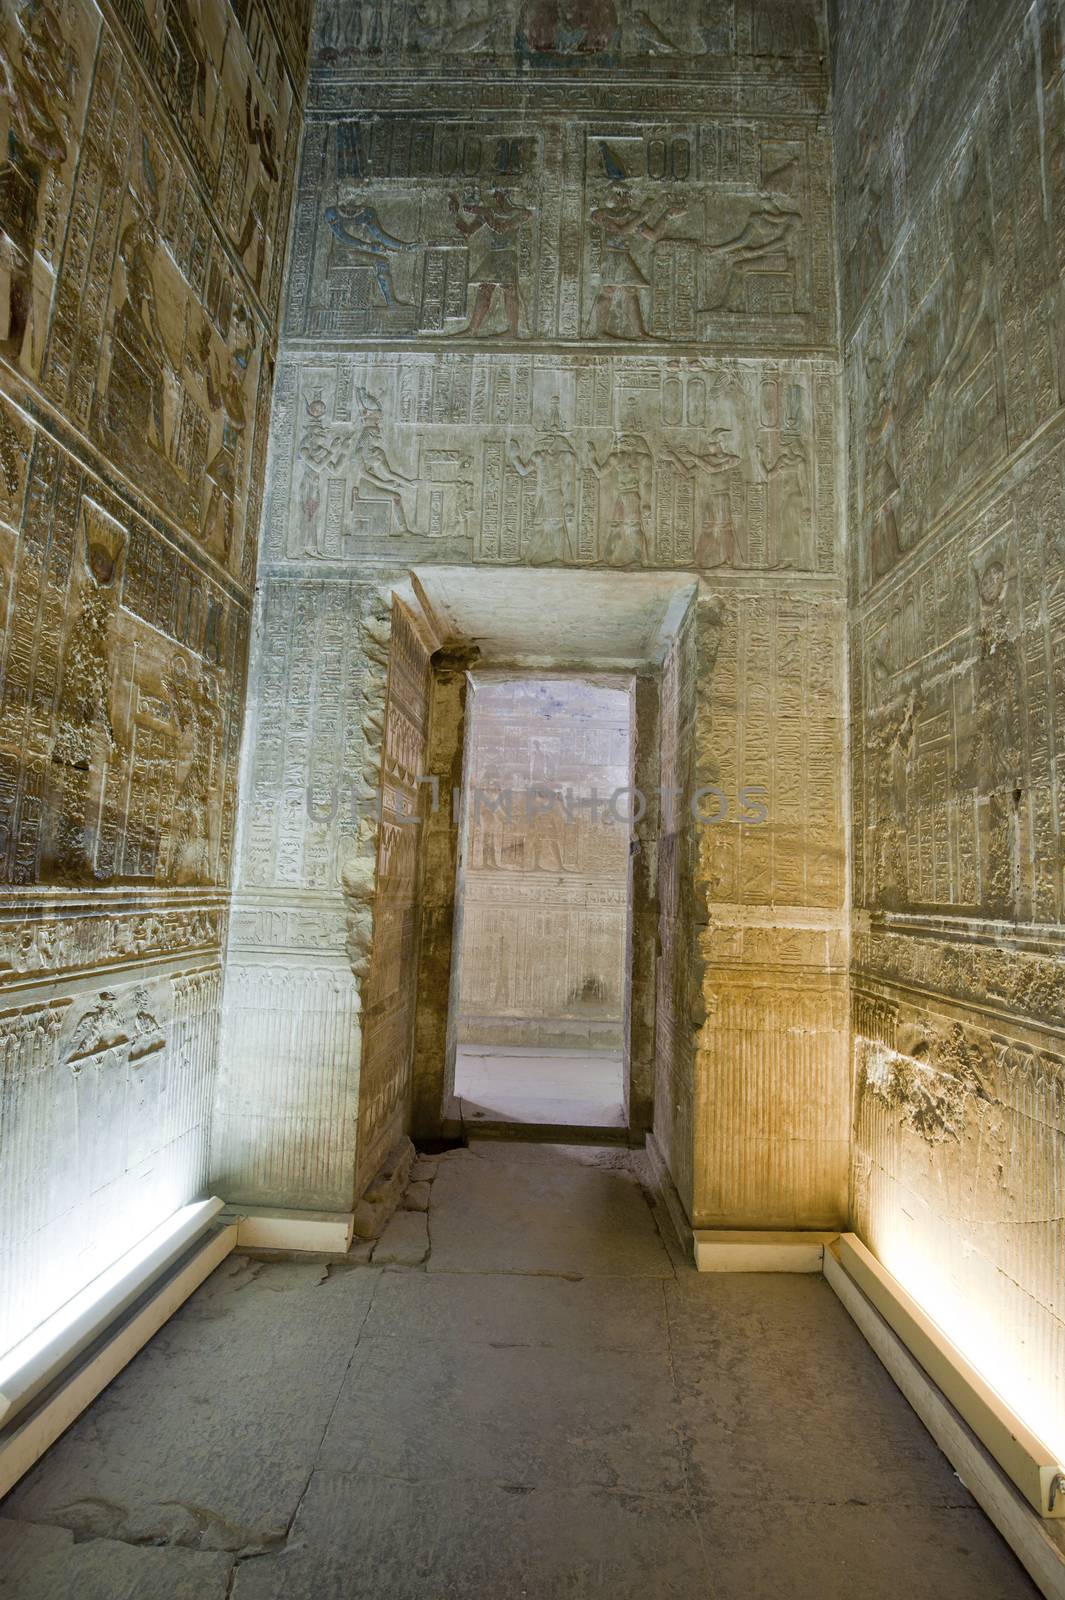 Doorway inside an ancient egyptian temple by paulvinten